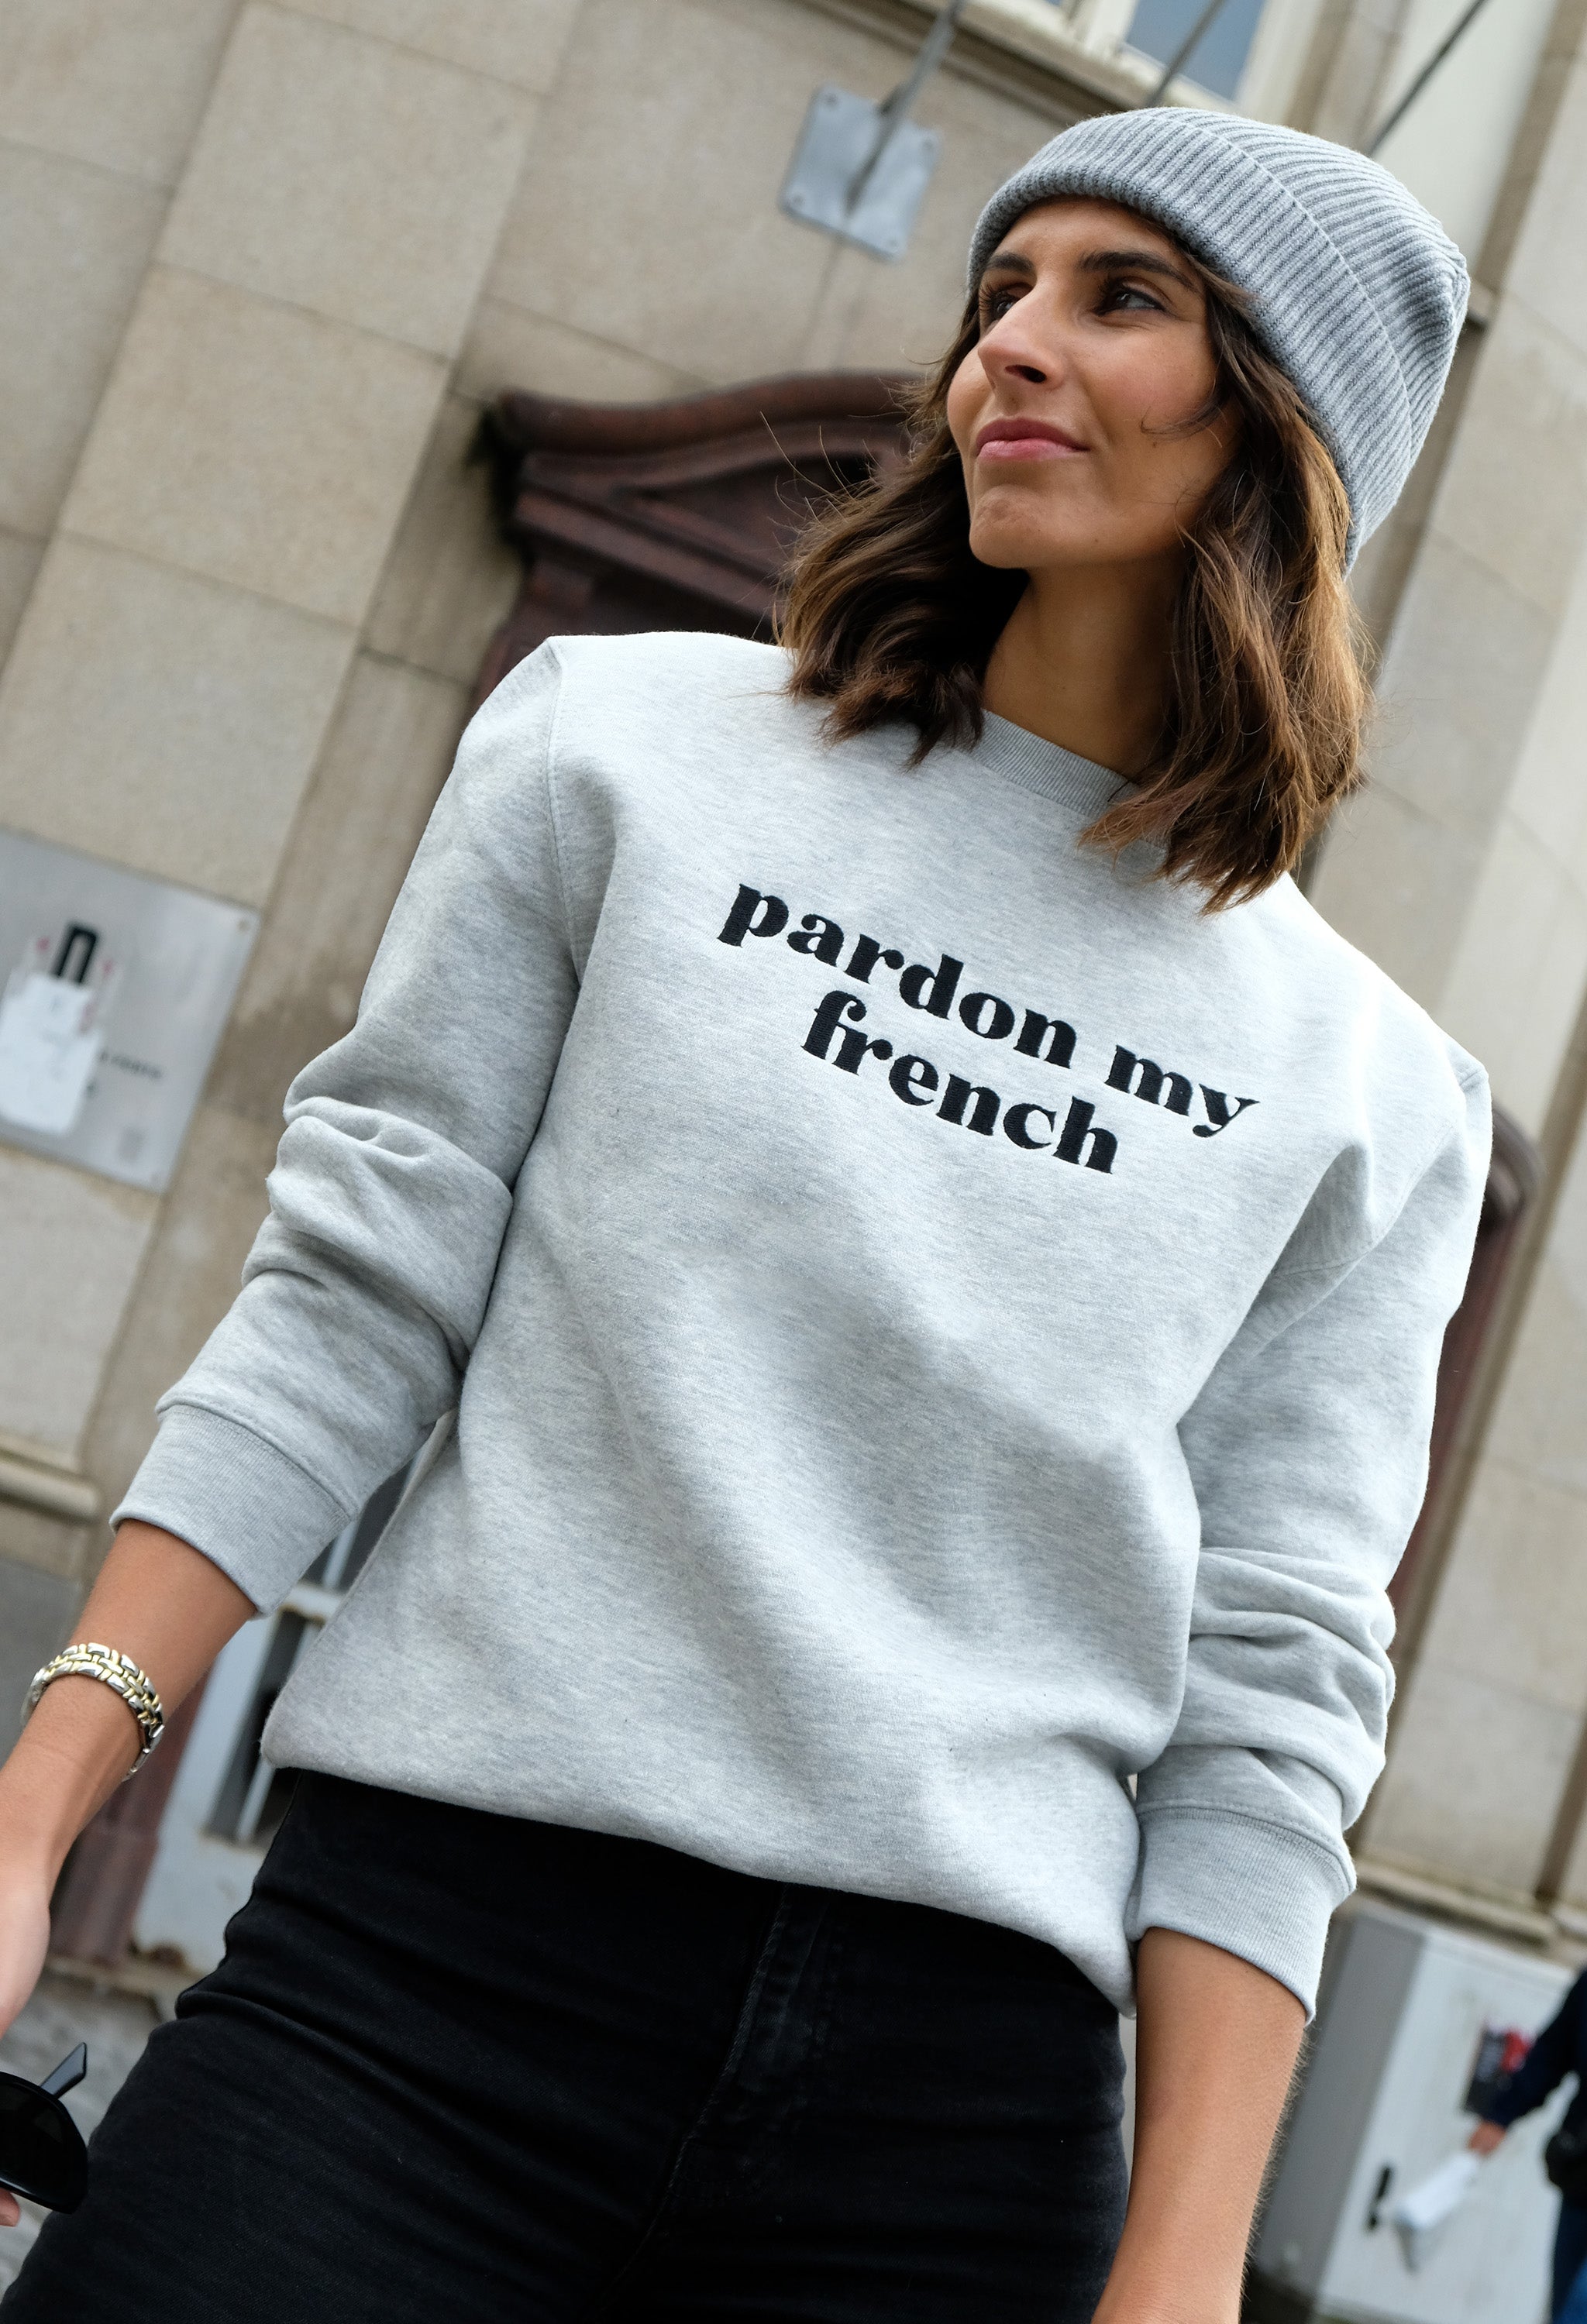 Pardon my French Sweatshirt